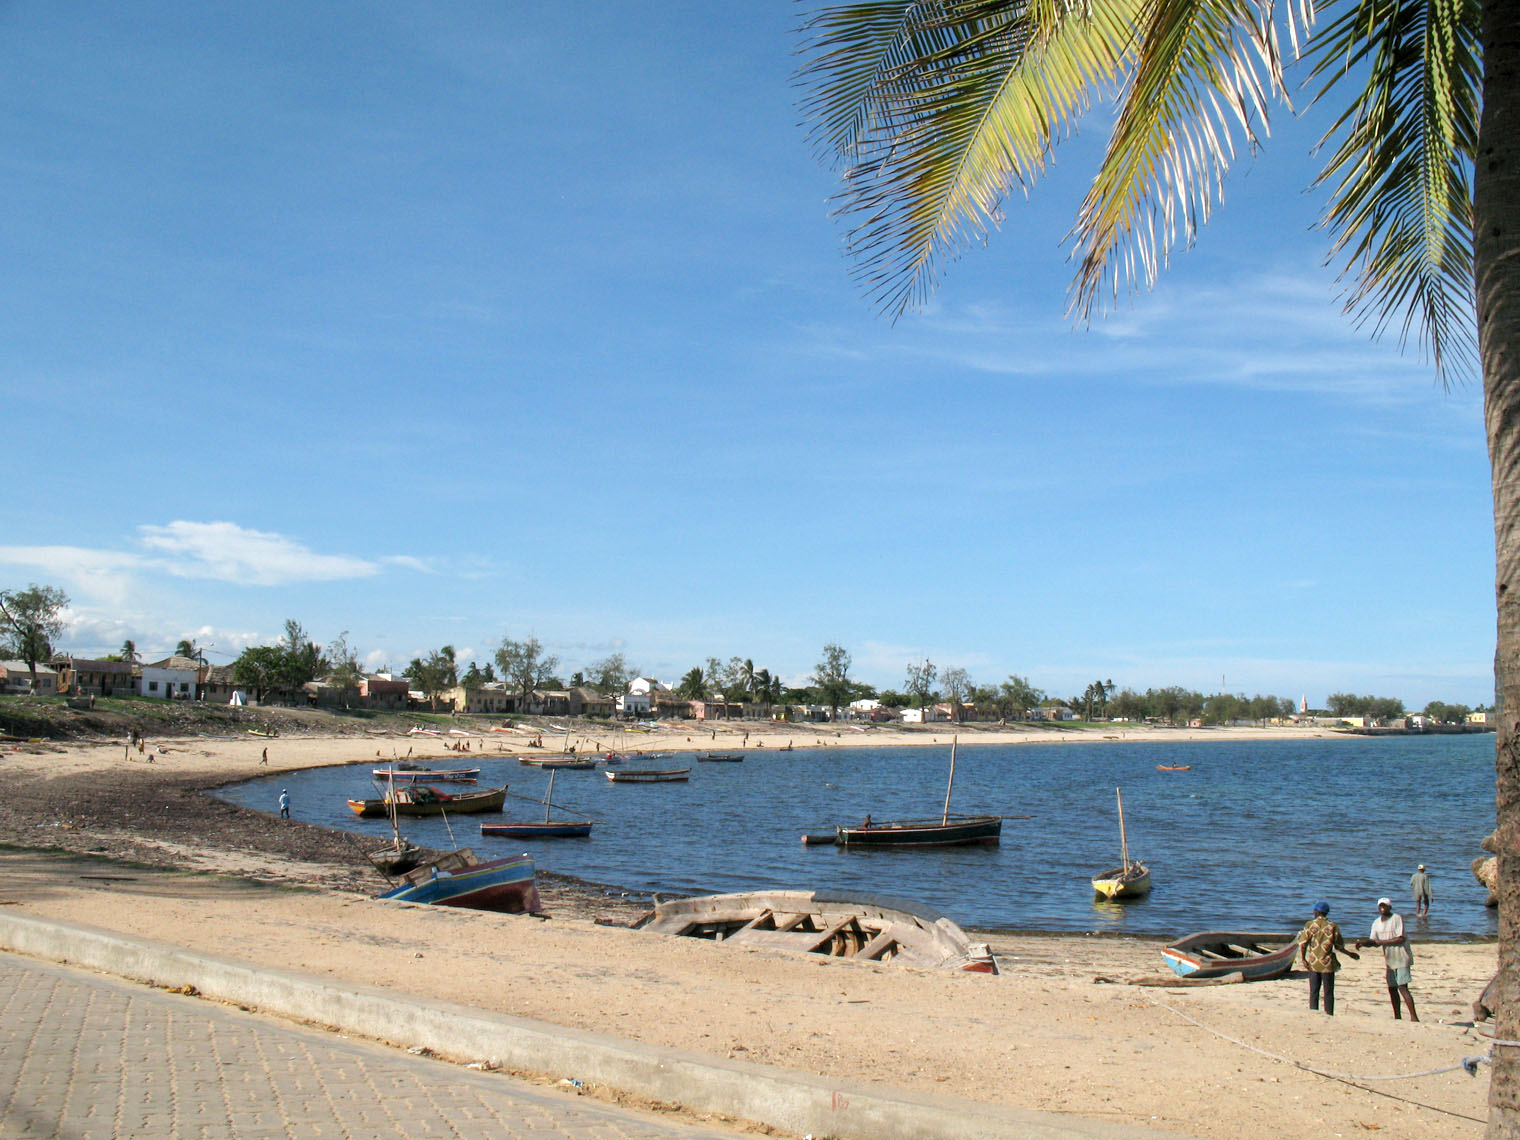 Fotografija Mozambique island Beach z prostorna obala